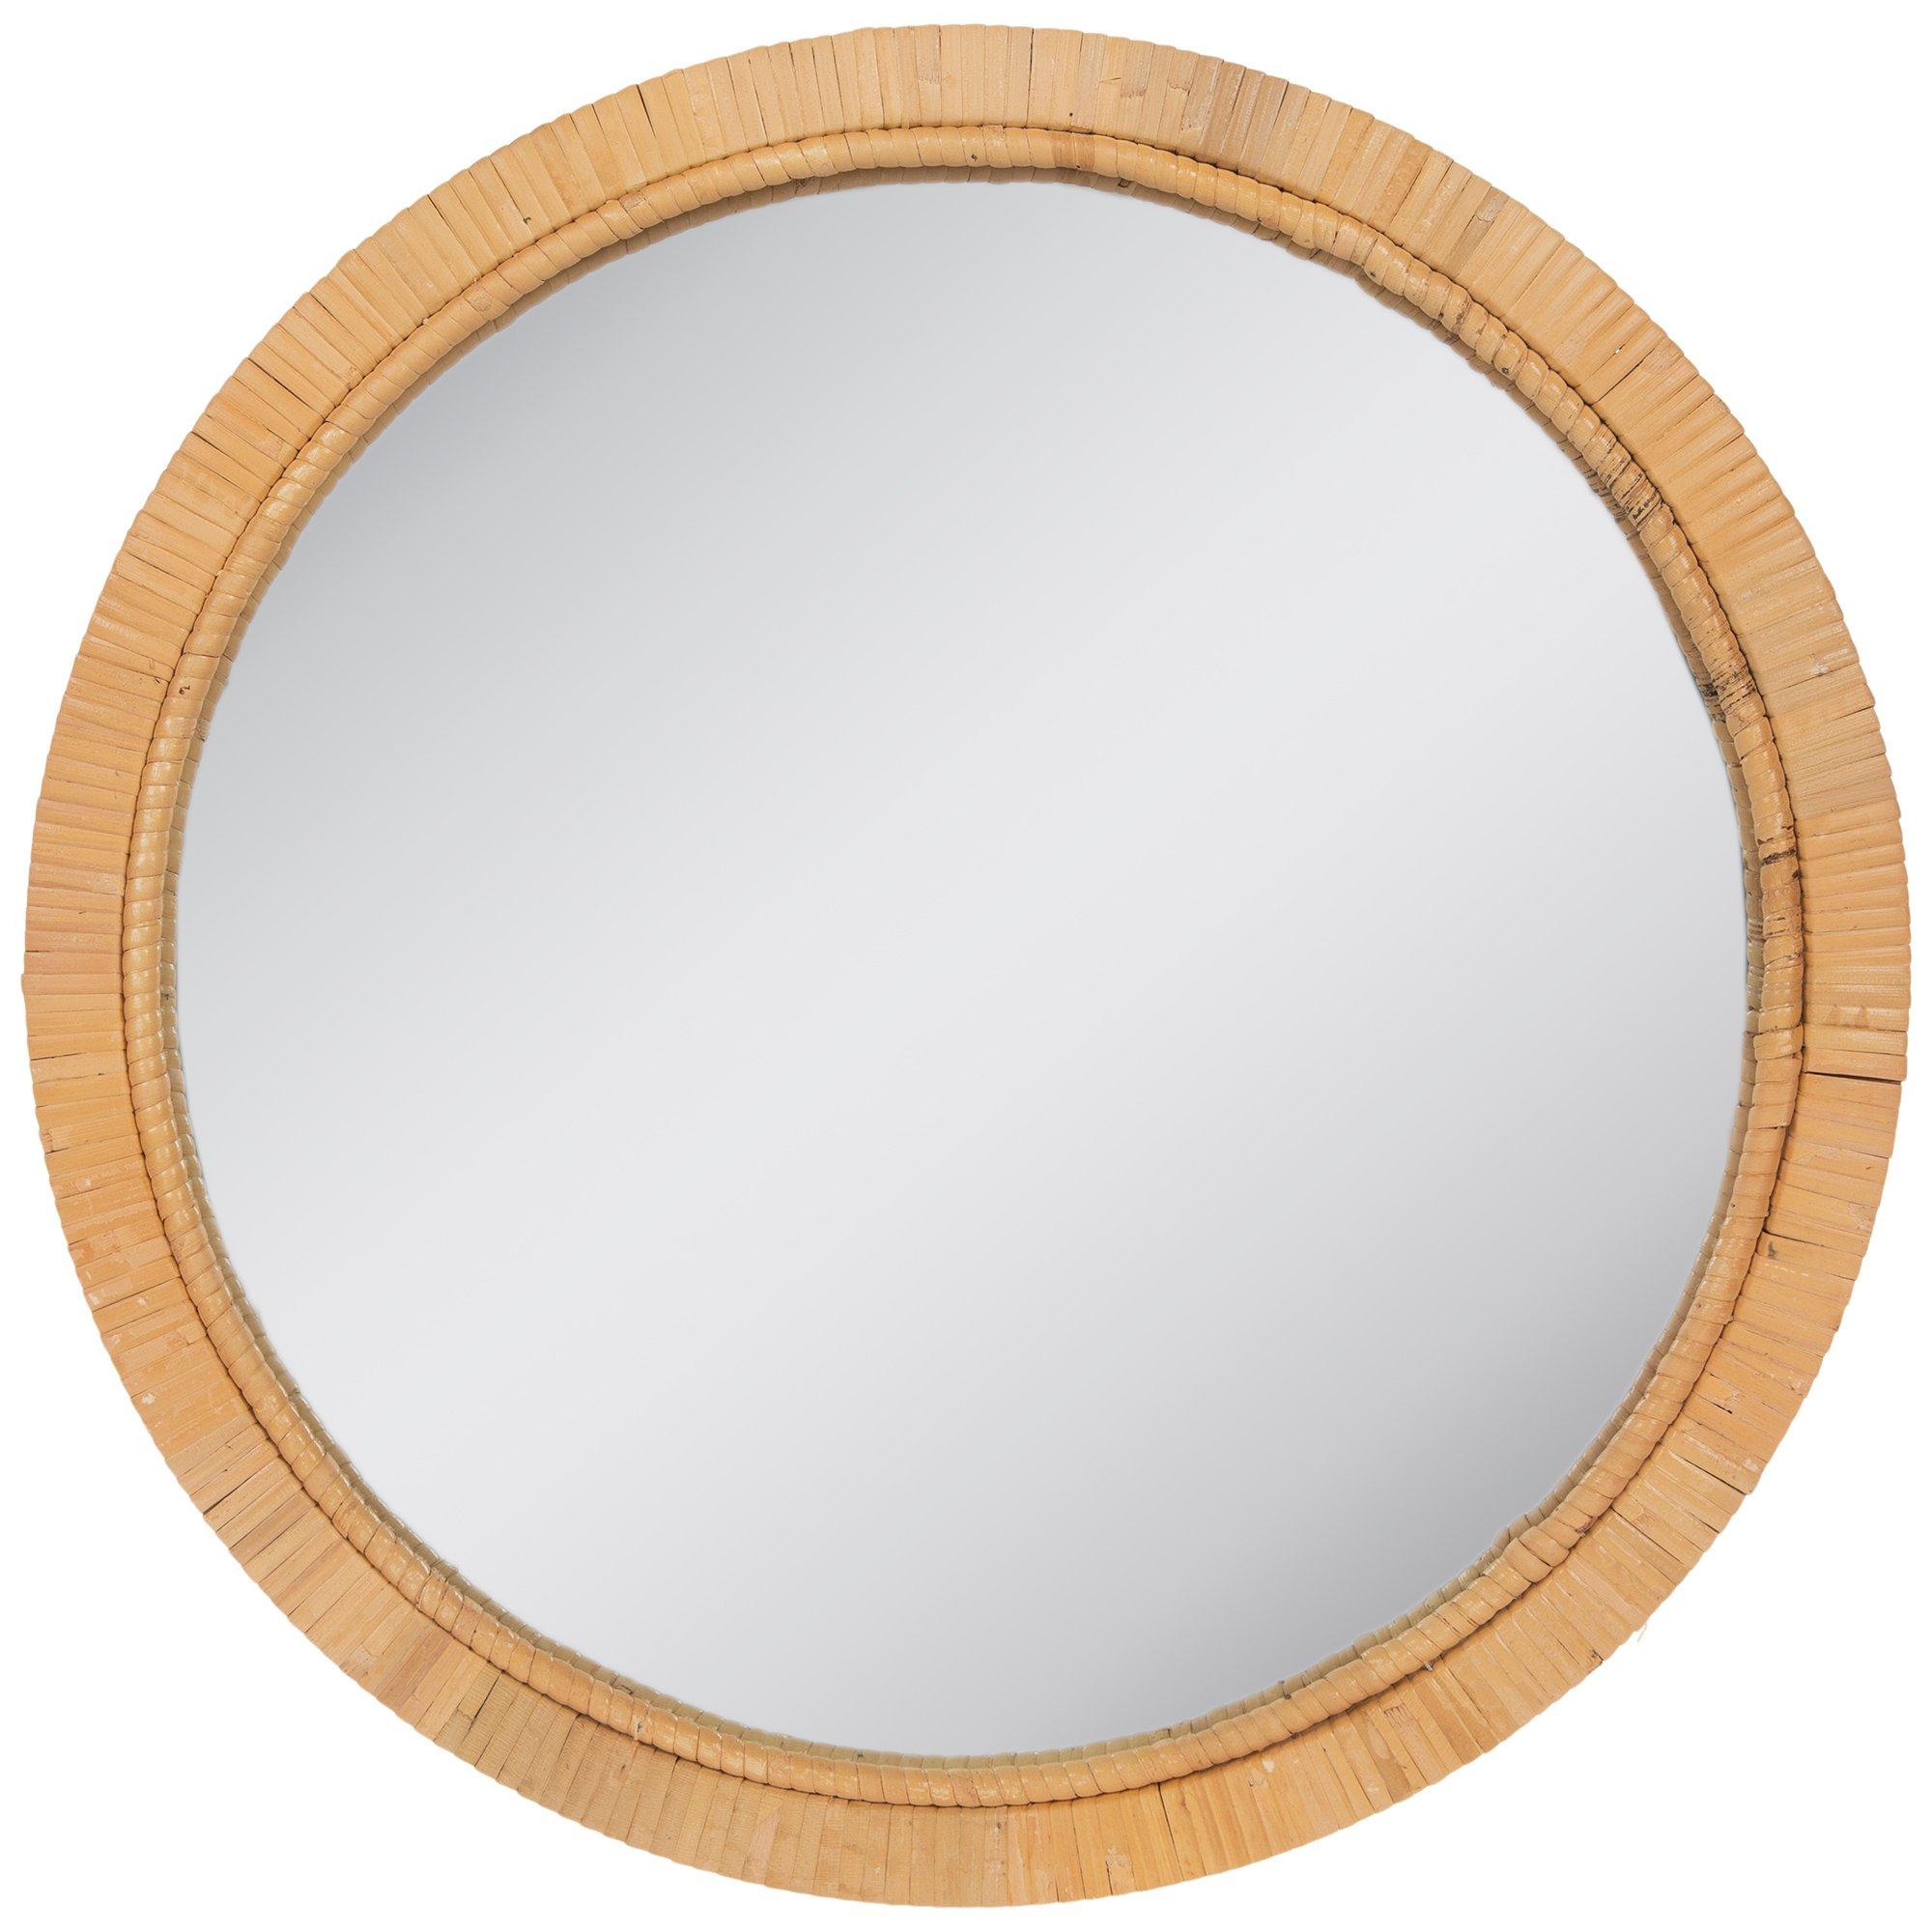 Round Rattan Wall Mirror